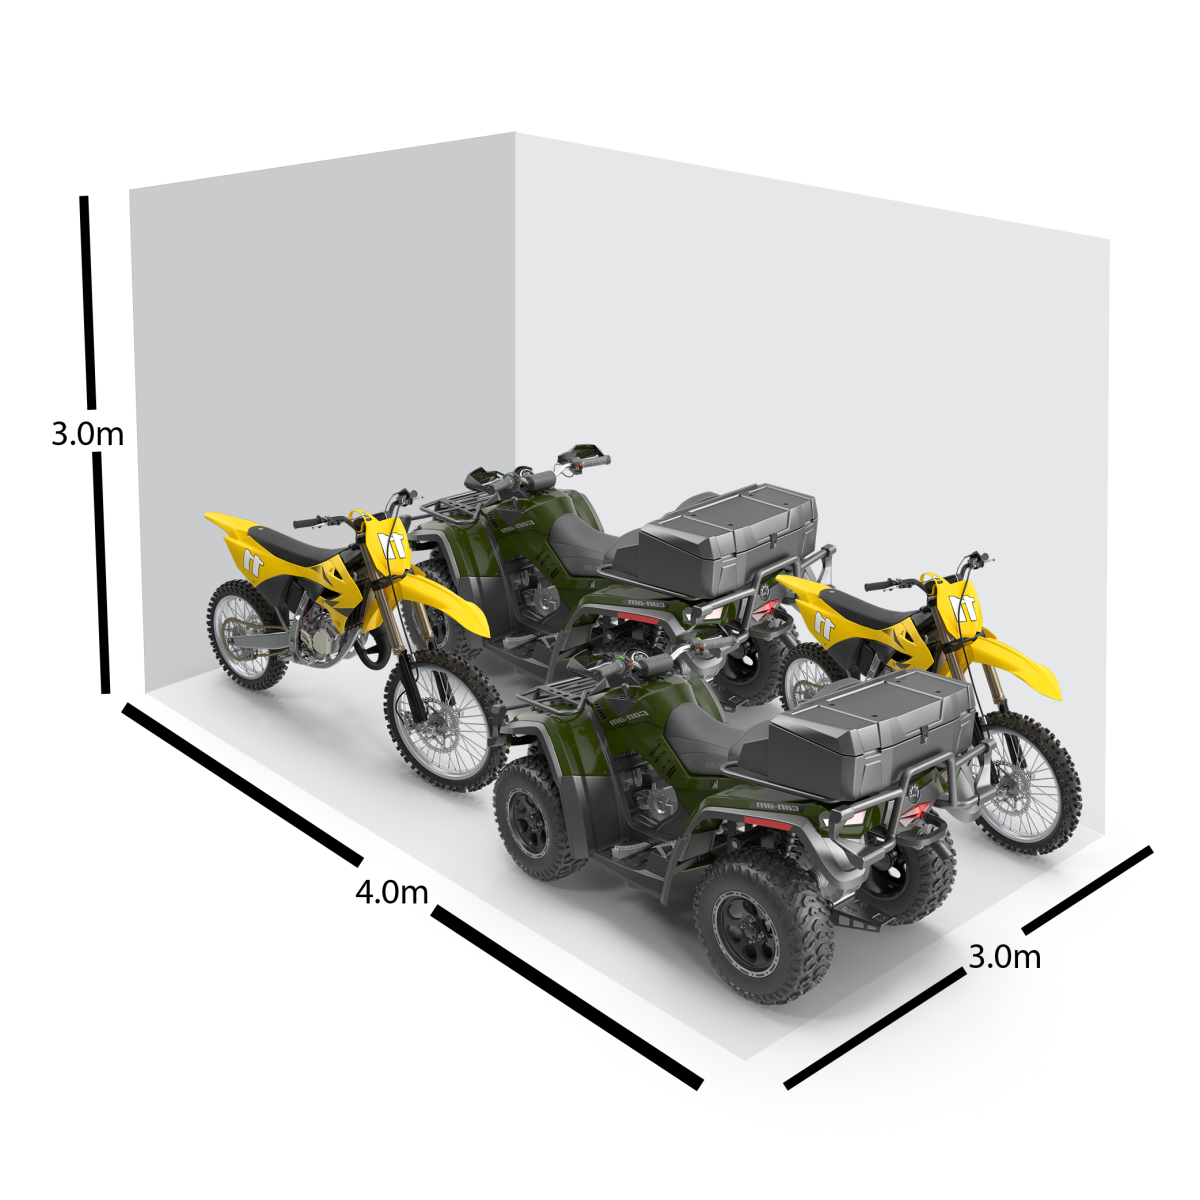 Yellow motorbikes and black quadbikes